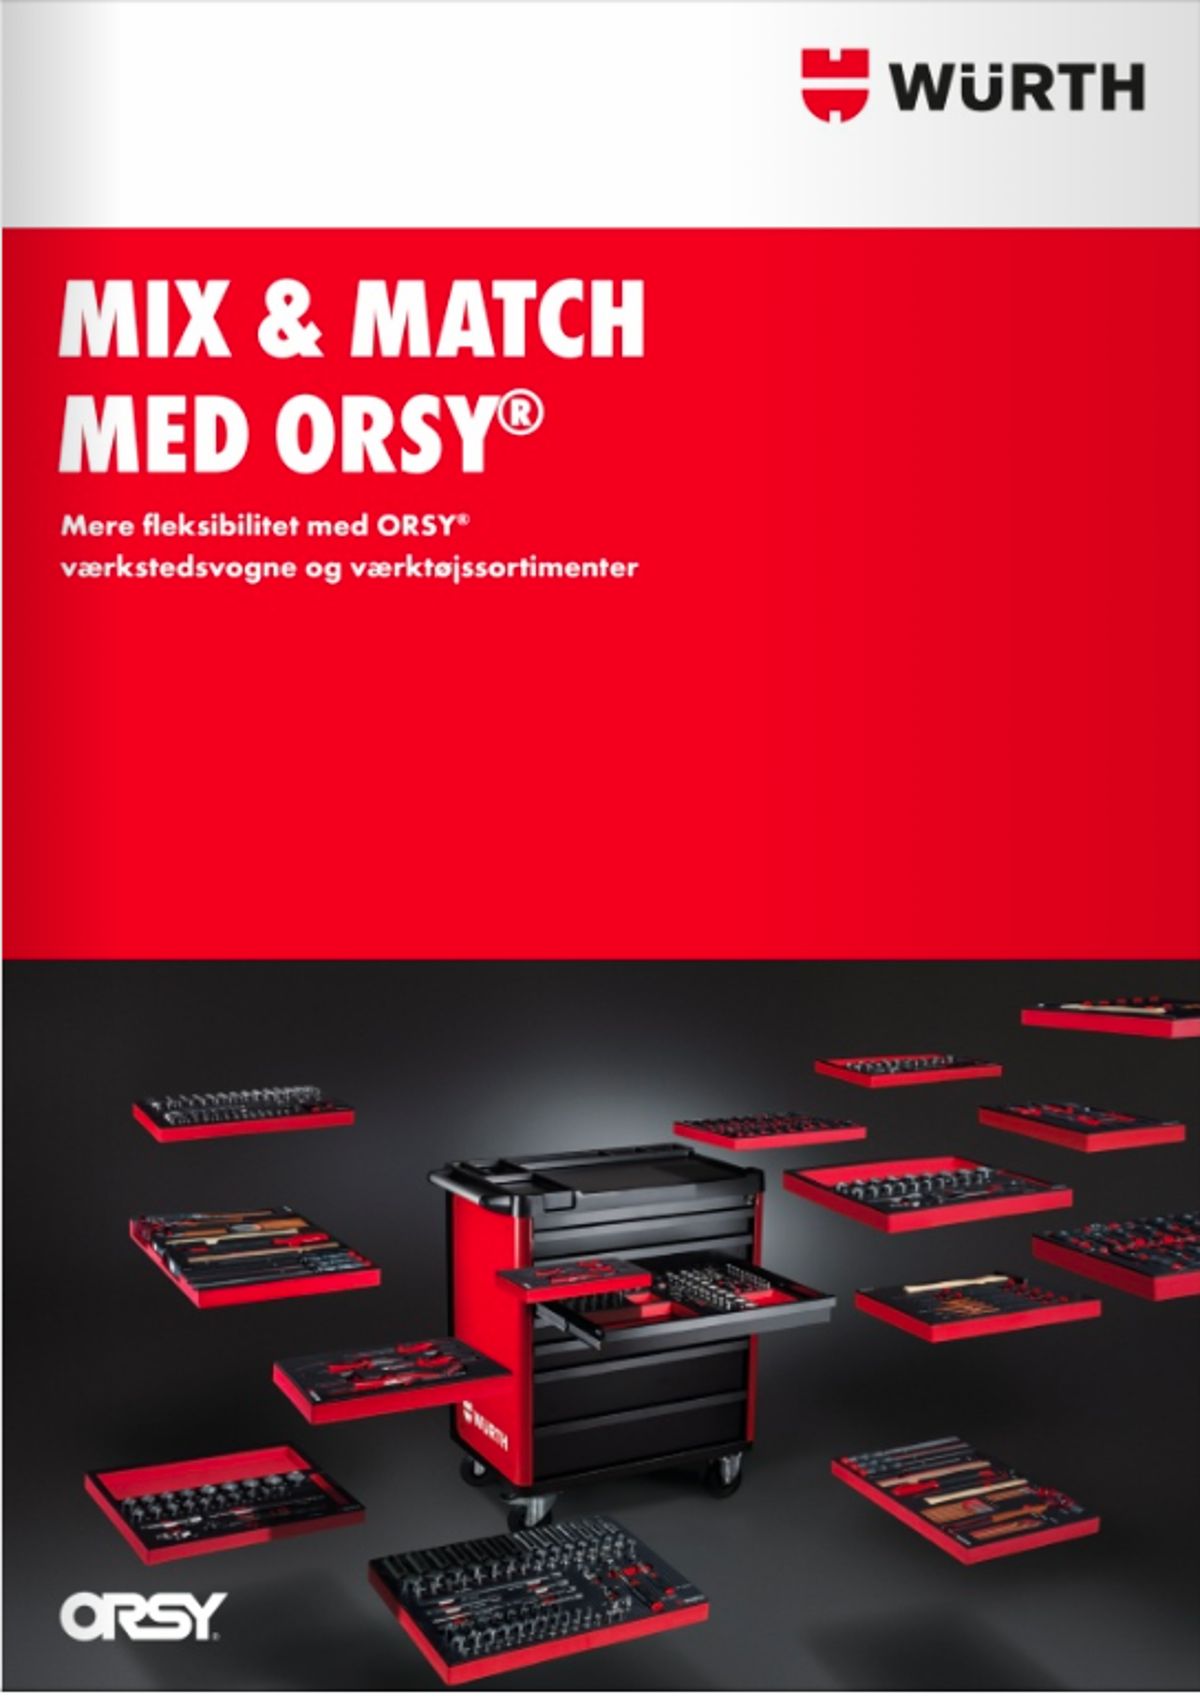 Mix & Match med ORSY